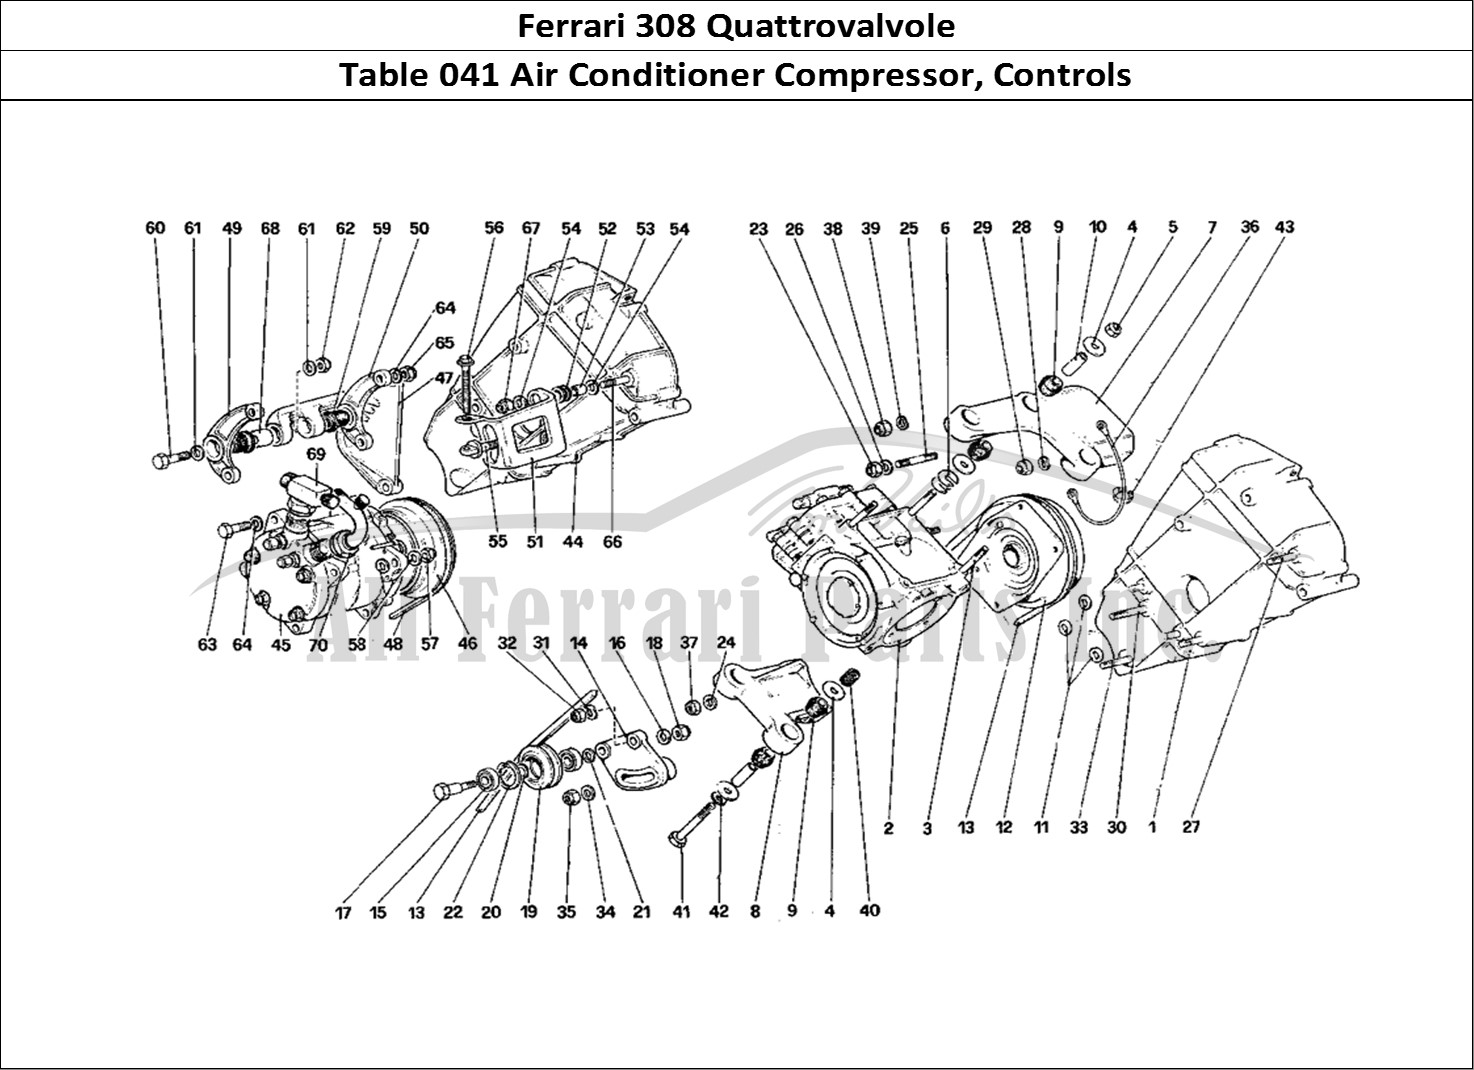 Ferrari Parts Ferrari 308 Quattrovalvole (1985) Page 041 Air Conditioning Compress